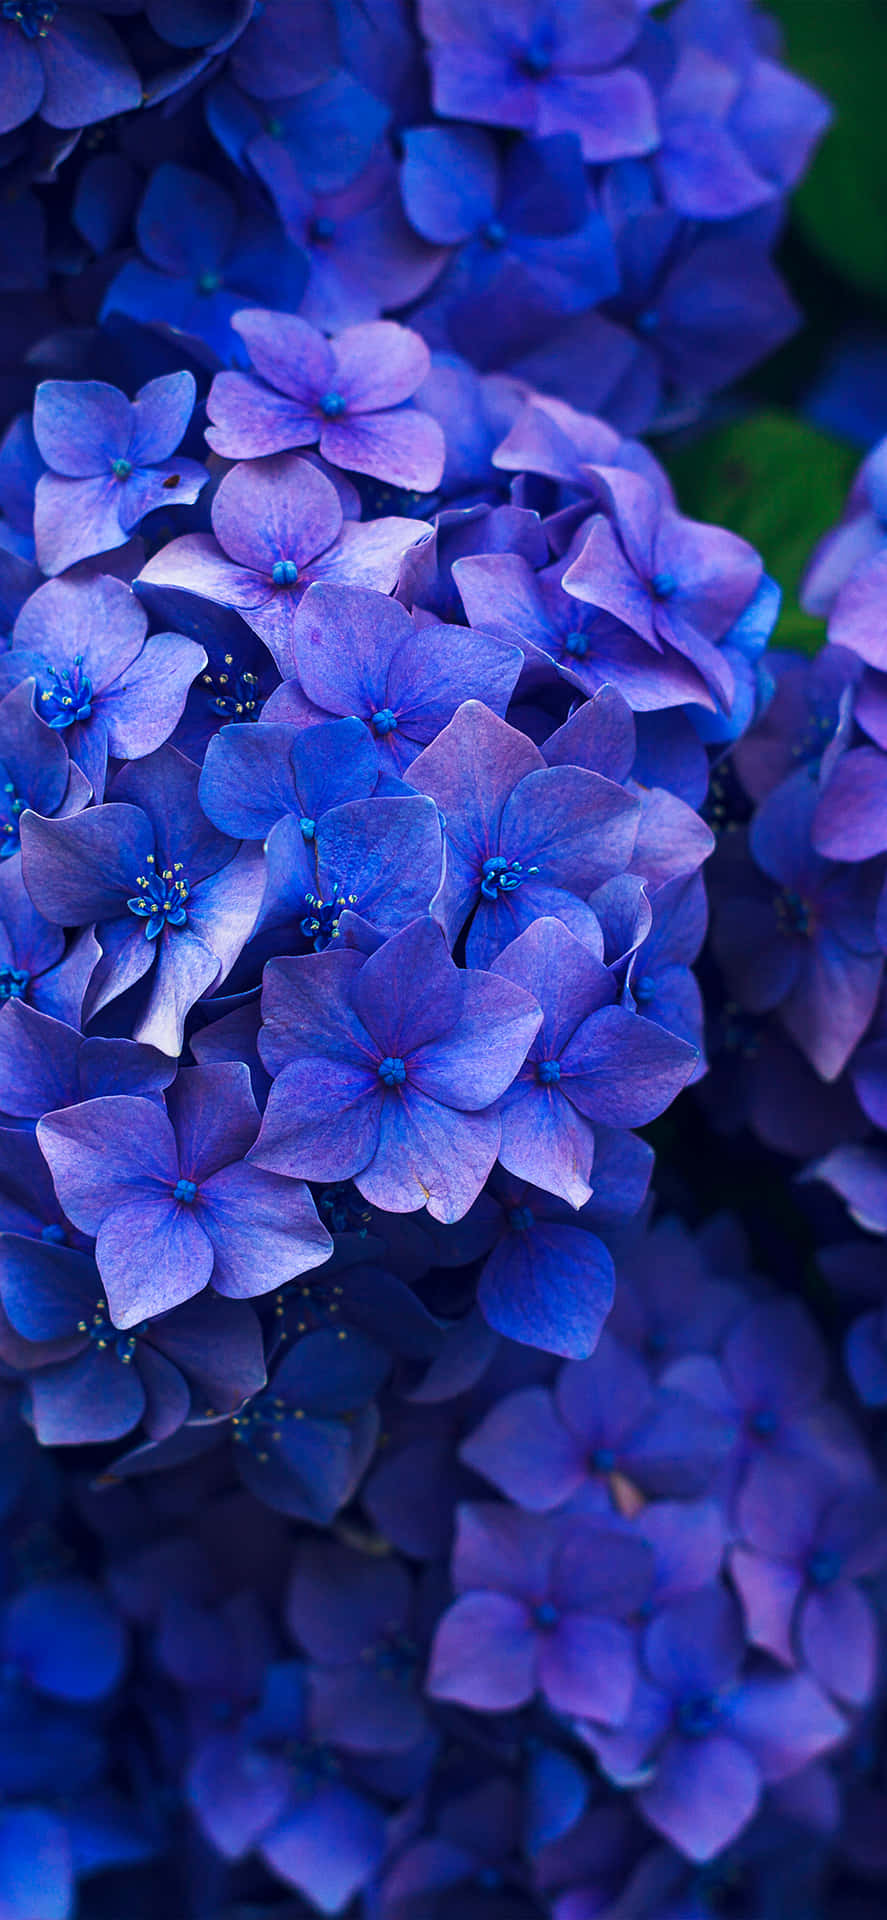 Hydrangeadunkelblaue Blumenbild